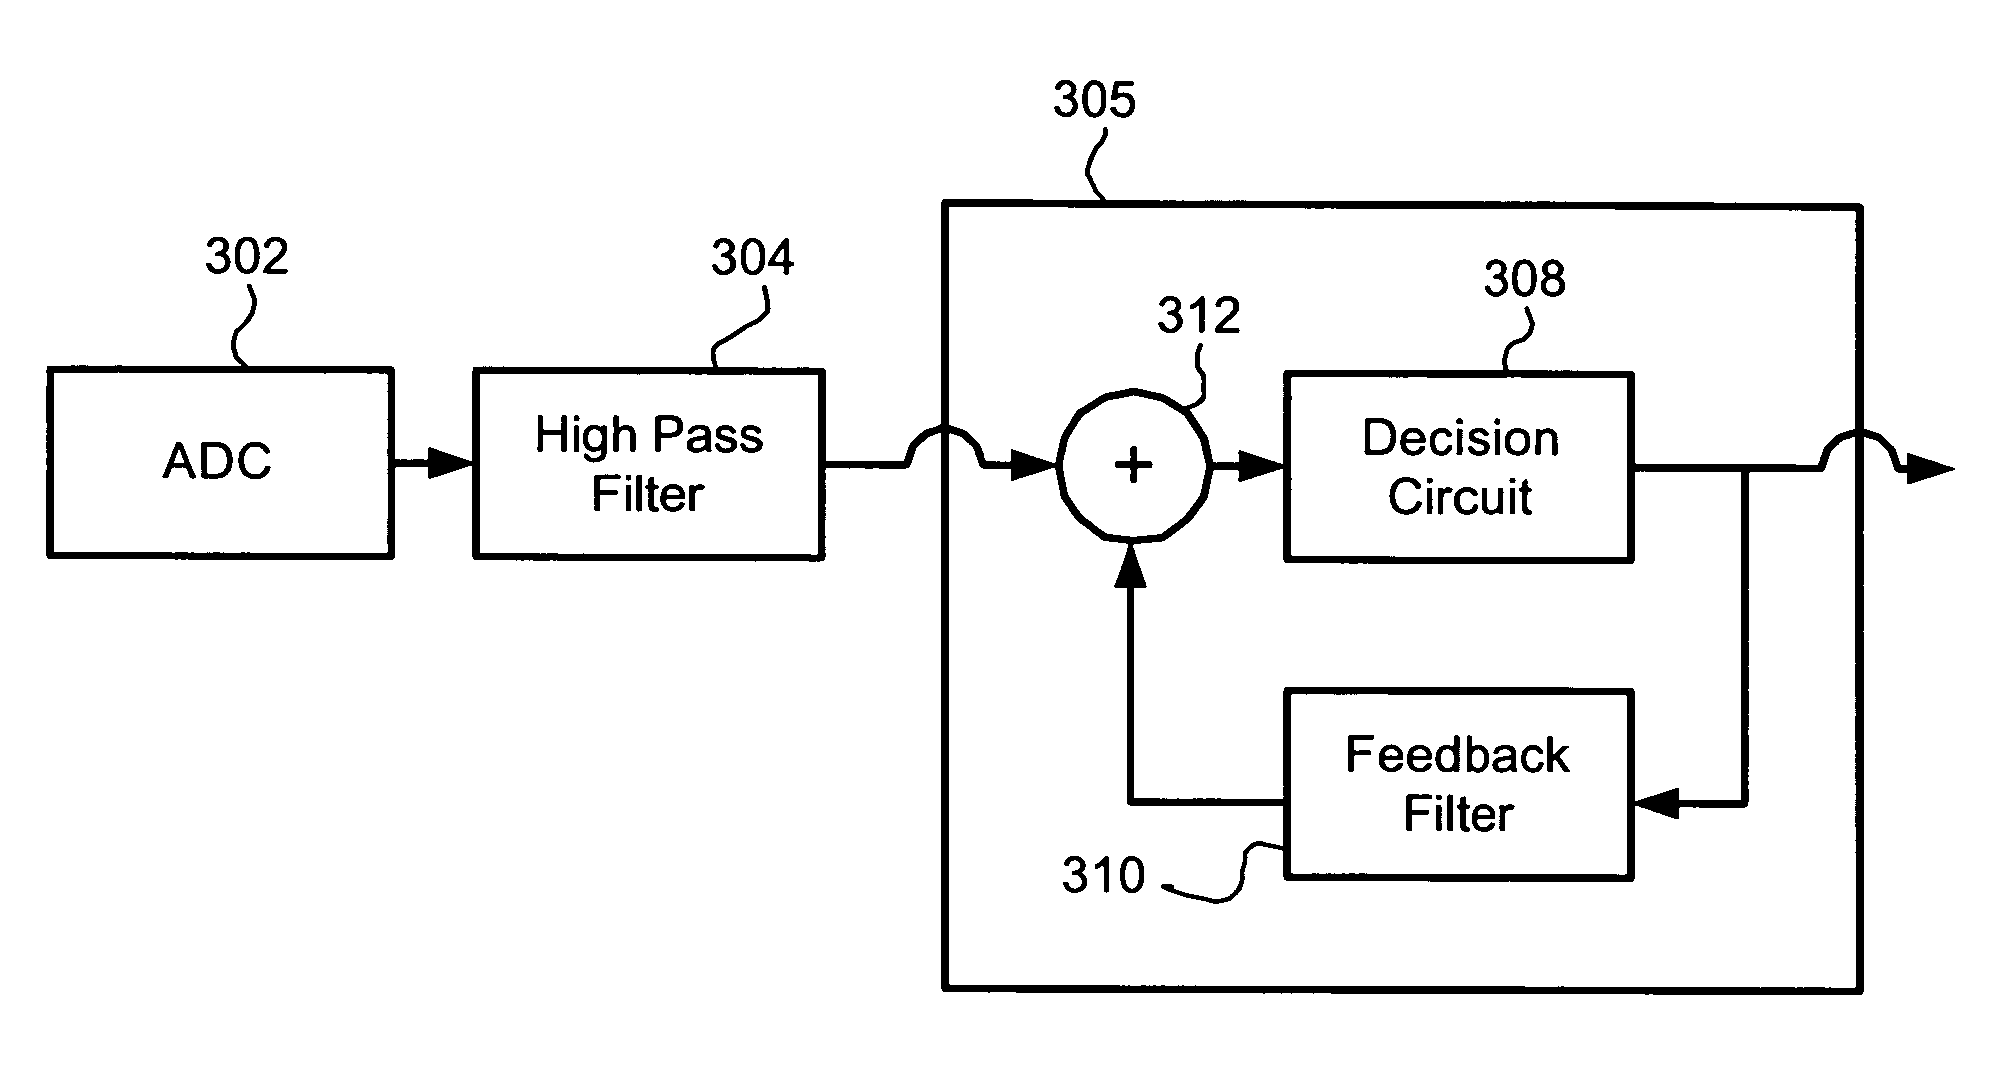 Feedforward equalizer for DFE based detector